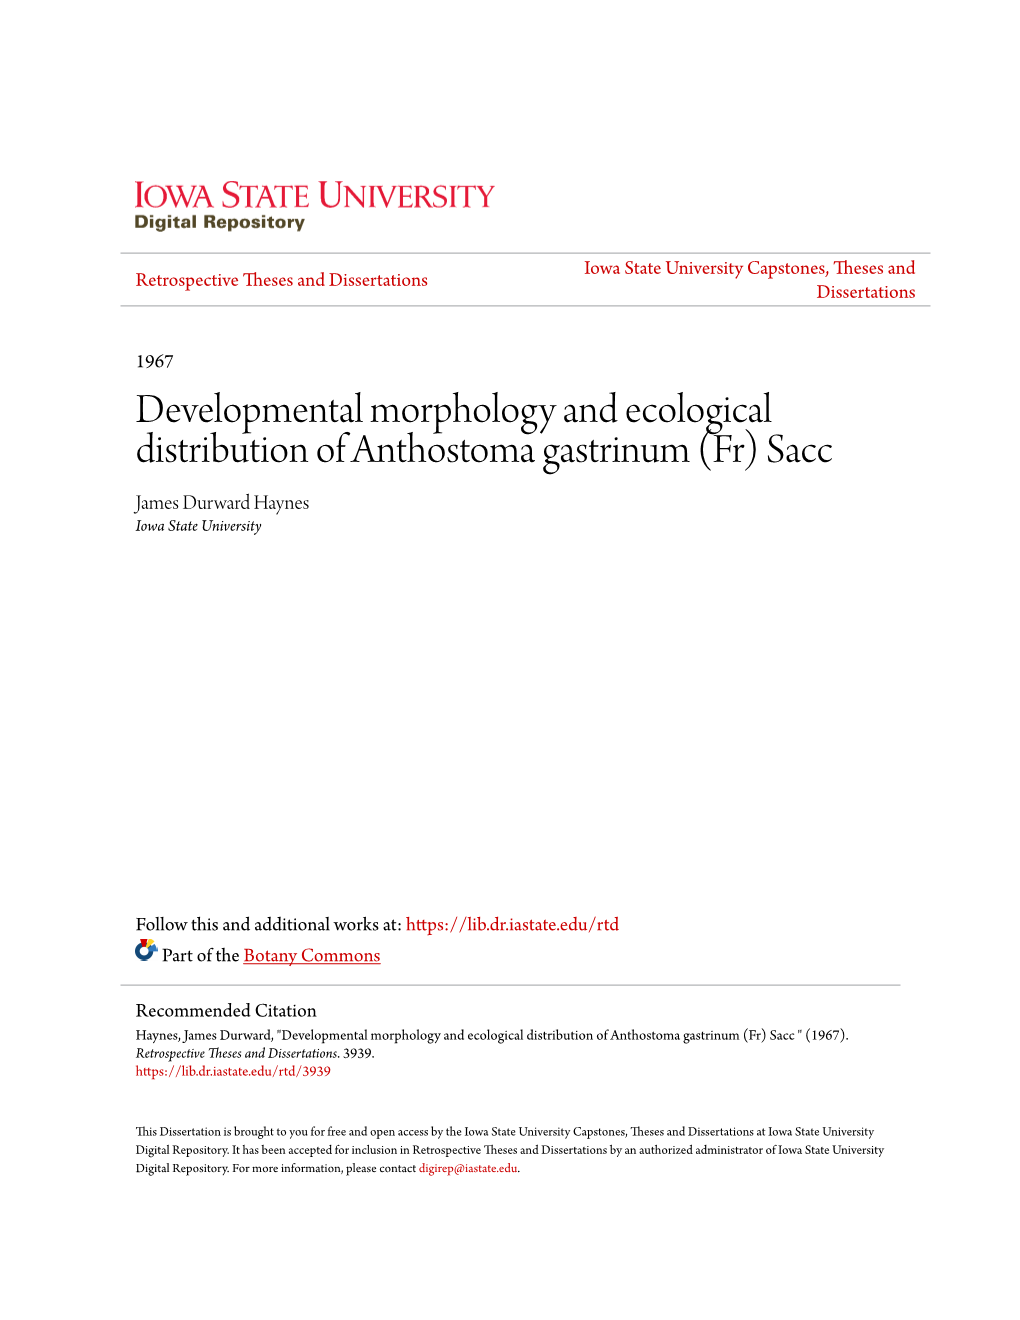 Developmental Morphology and Ecological Distribution of Anthostoma Gastrinum (Fr) Sacc James Durward Haynes Iowa State University